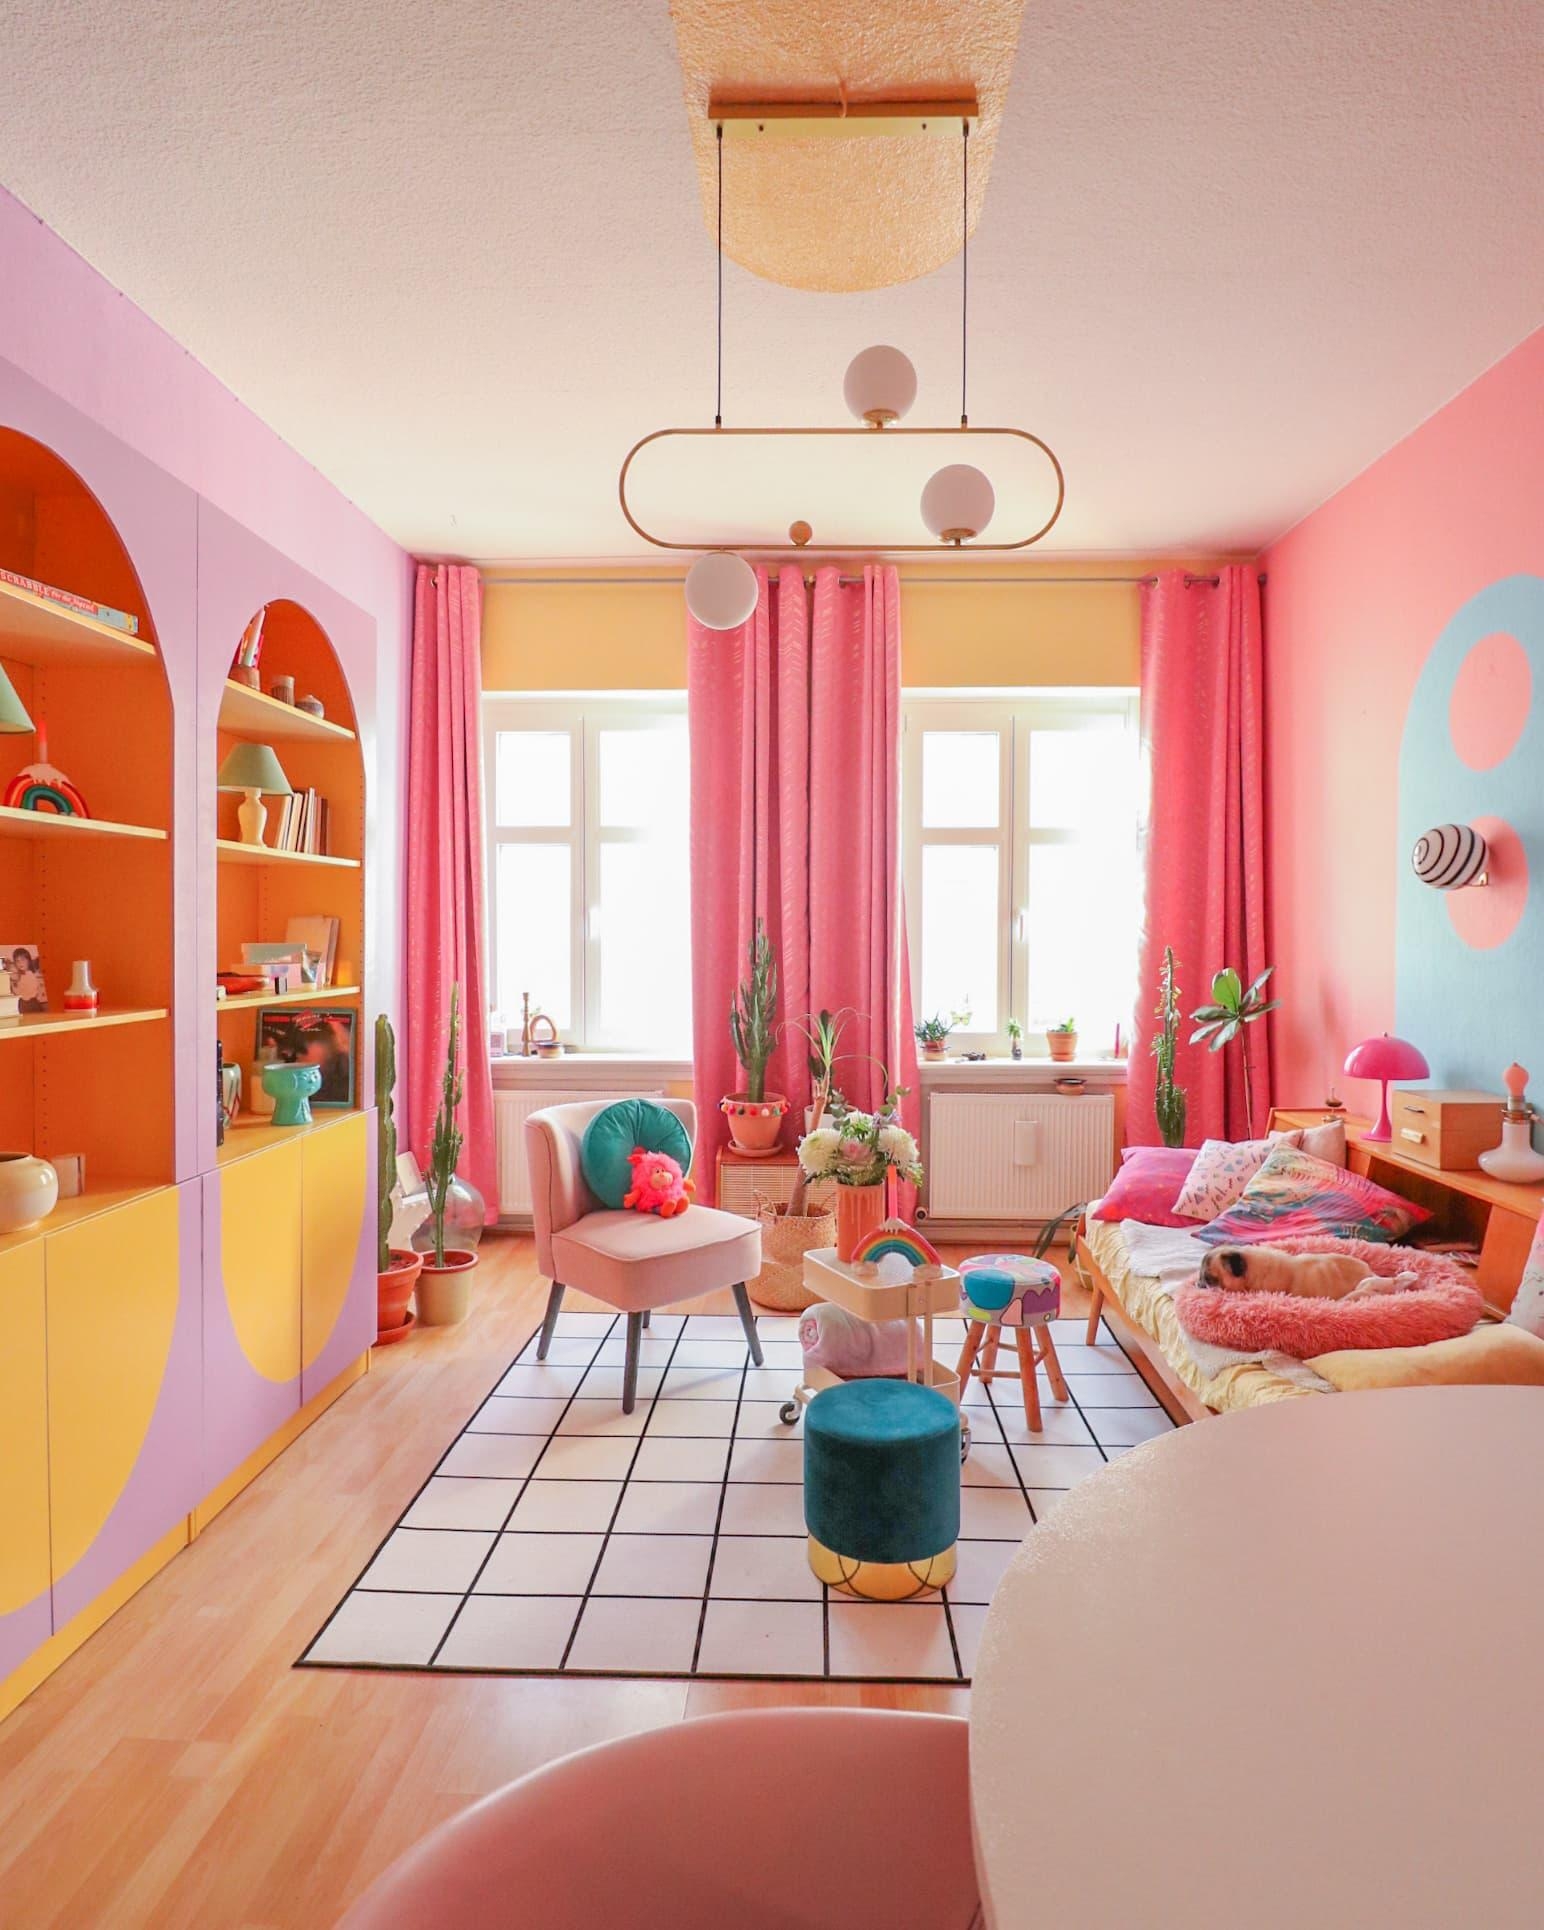 #livingroomstyling #livingroom #colorful #colormadetheroom 